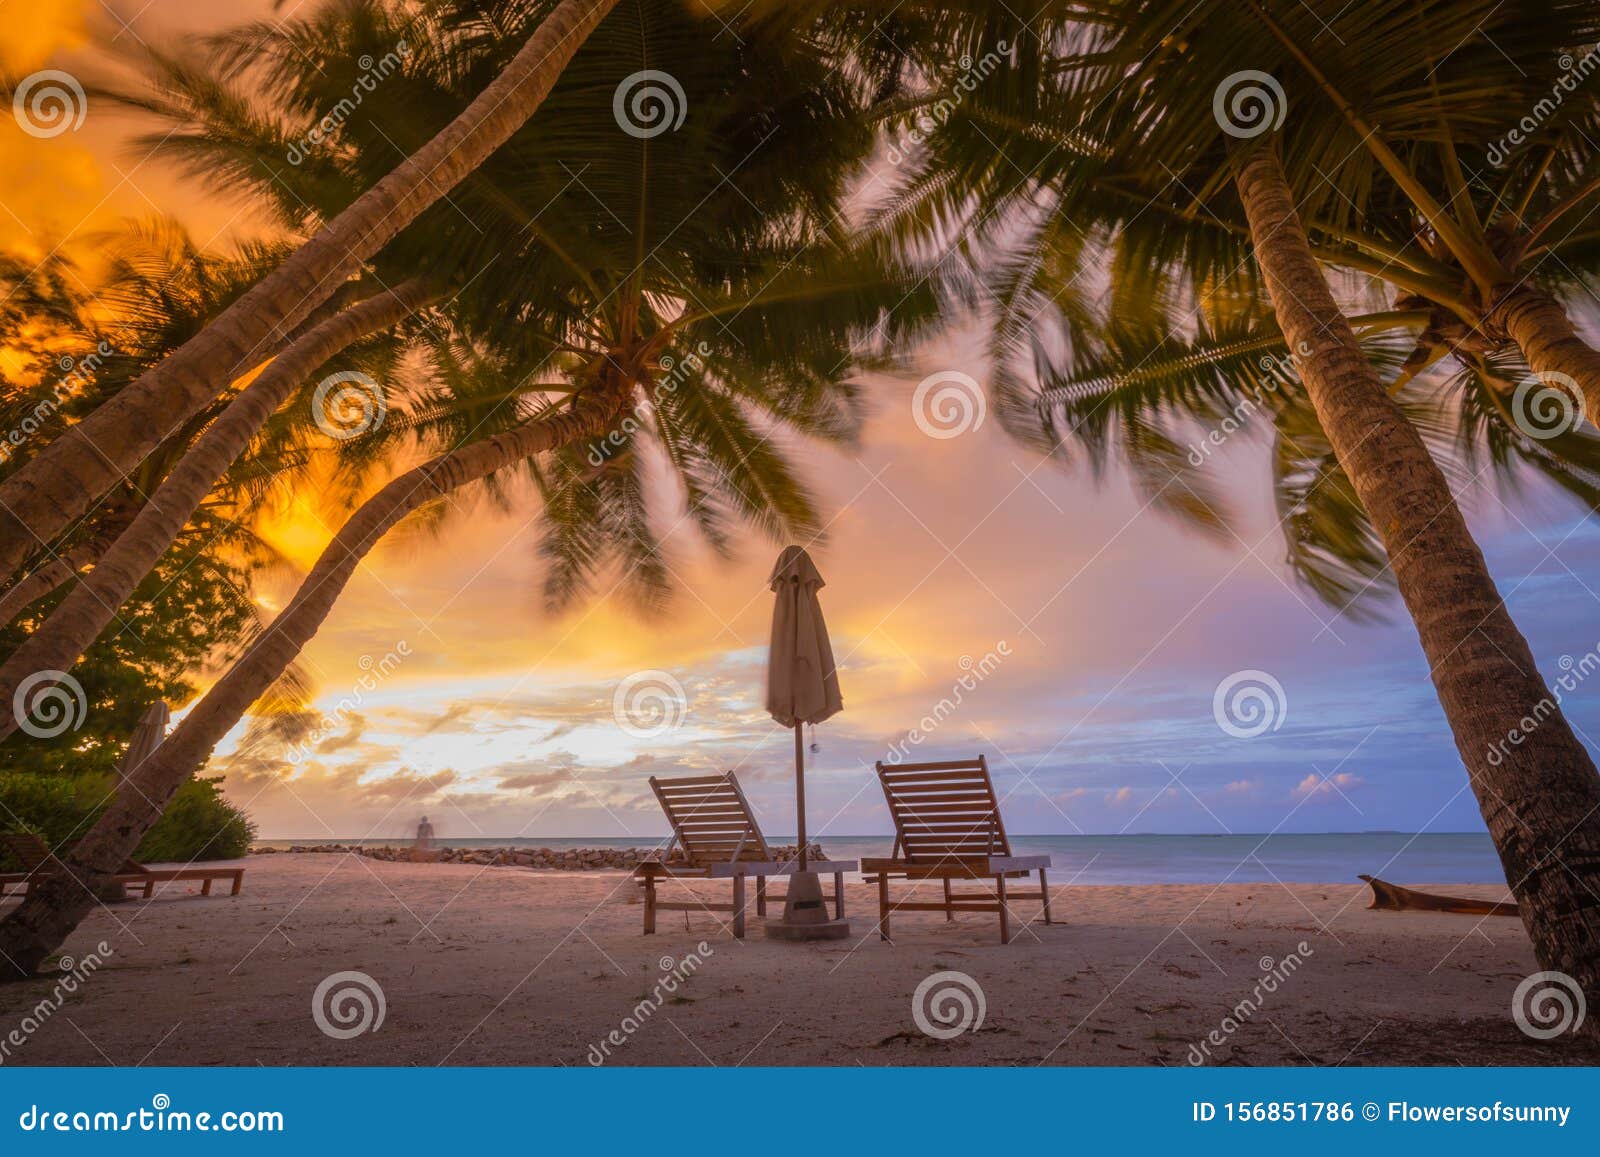 Sunset Beach Resort Relaxing And Romantic Sunset Beach Scene For